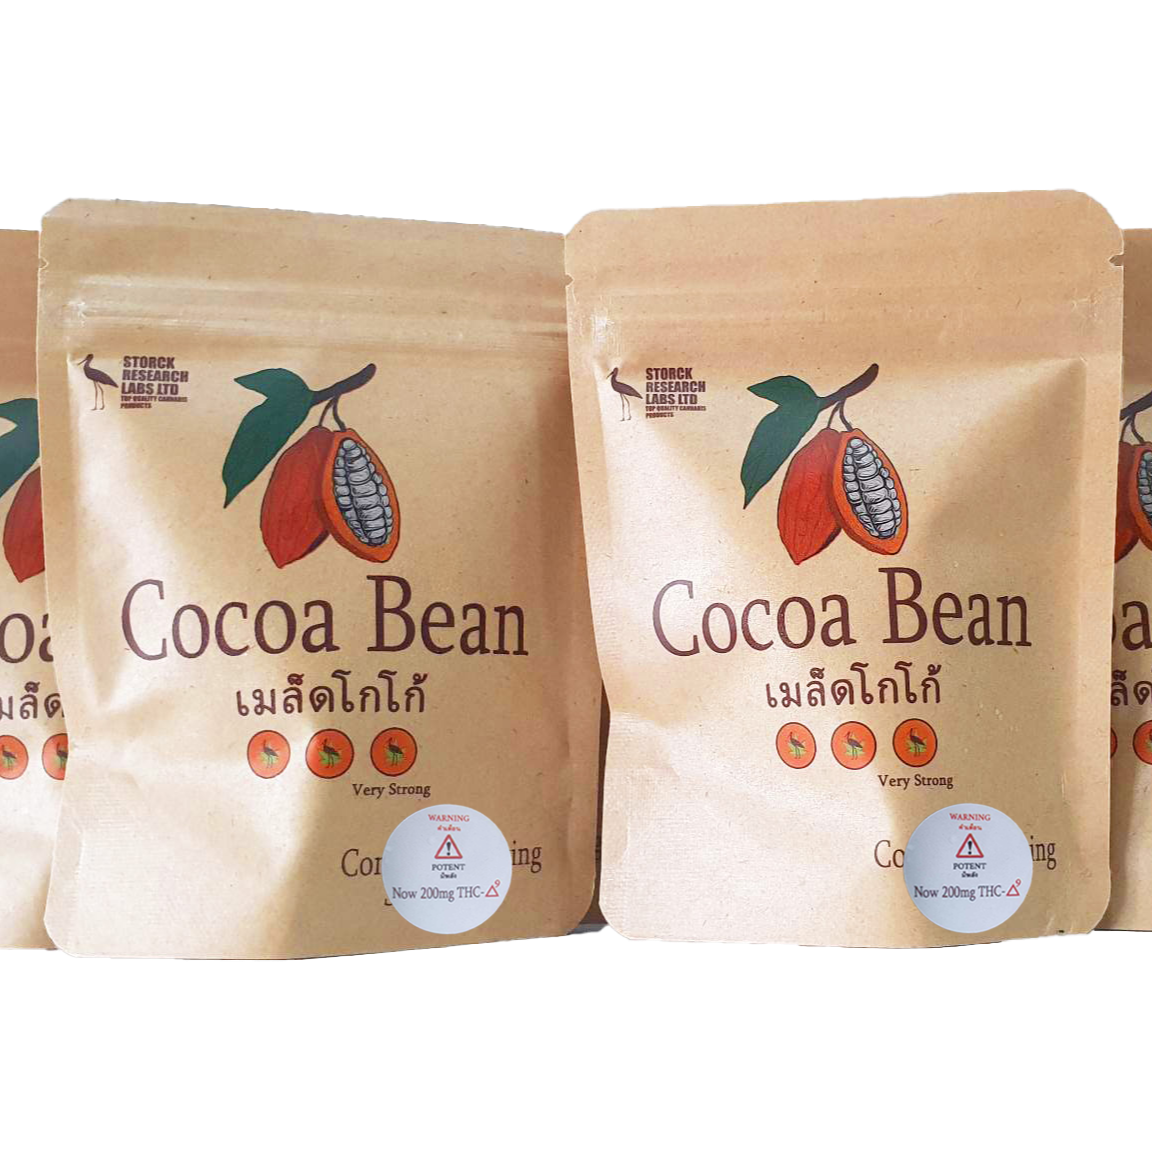 Cocoa Bean (Chocolate Cookie)